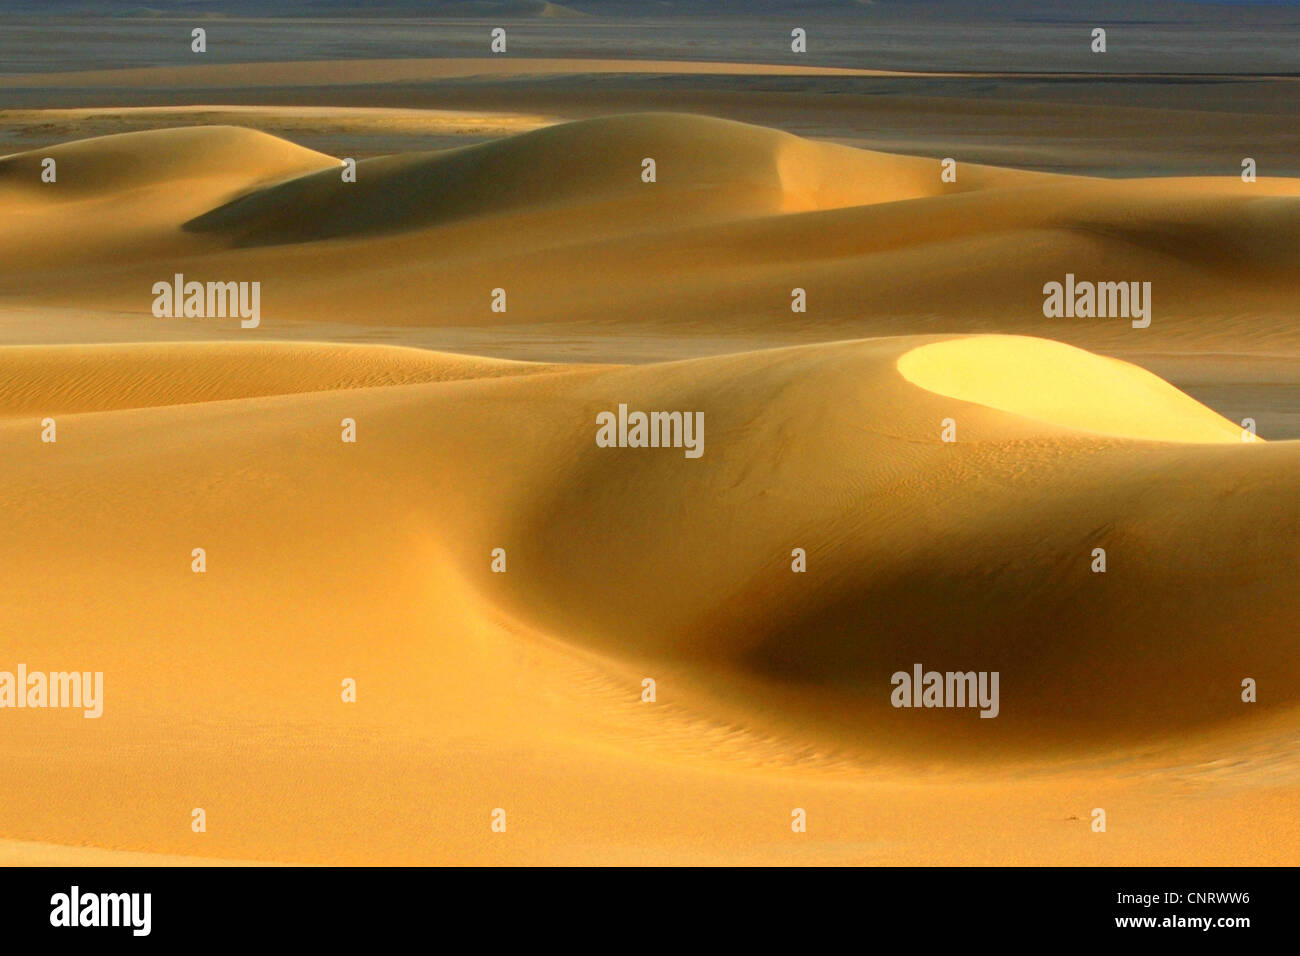 the Great Sand Sea, Egypt, Sahara Stock Photo - Alamy